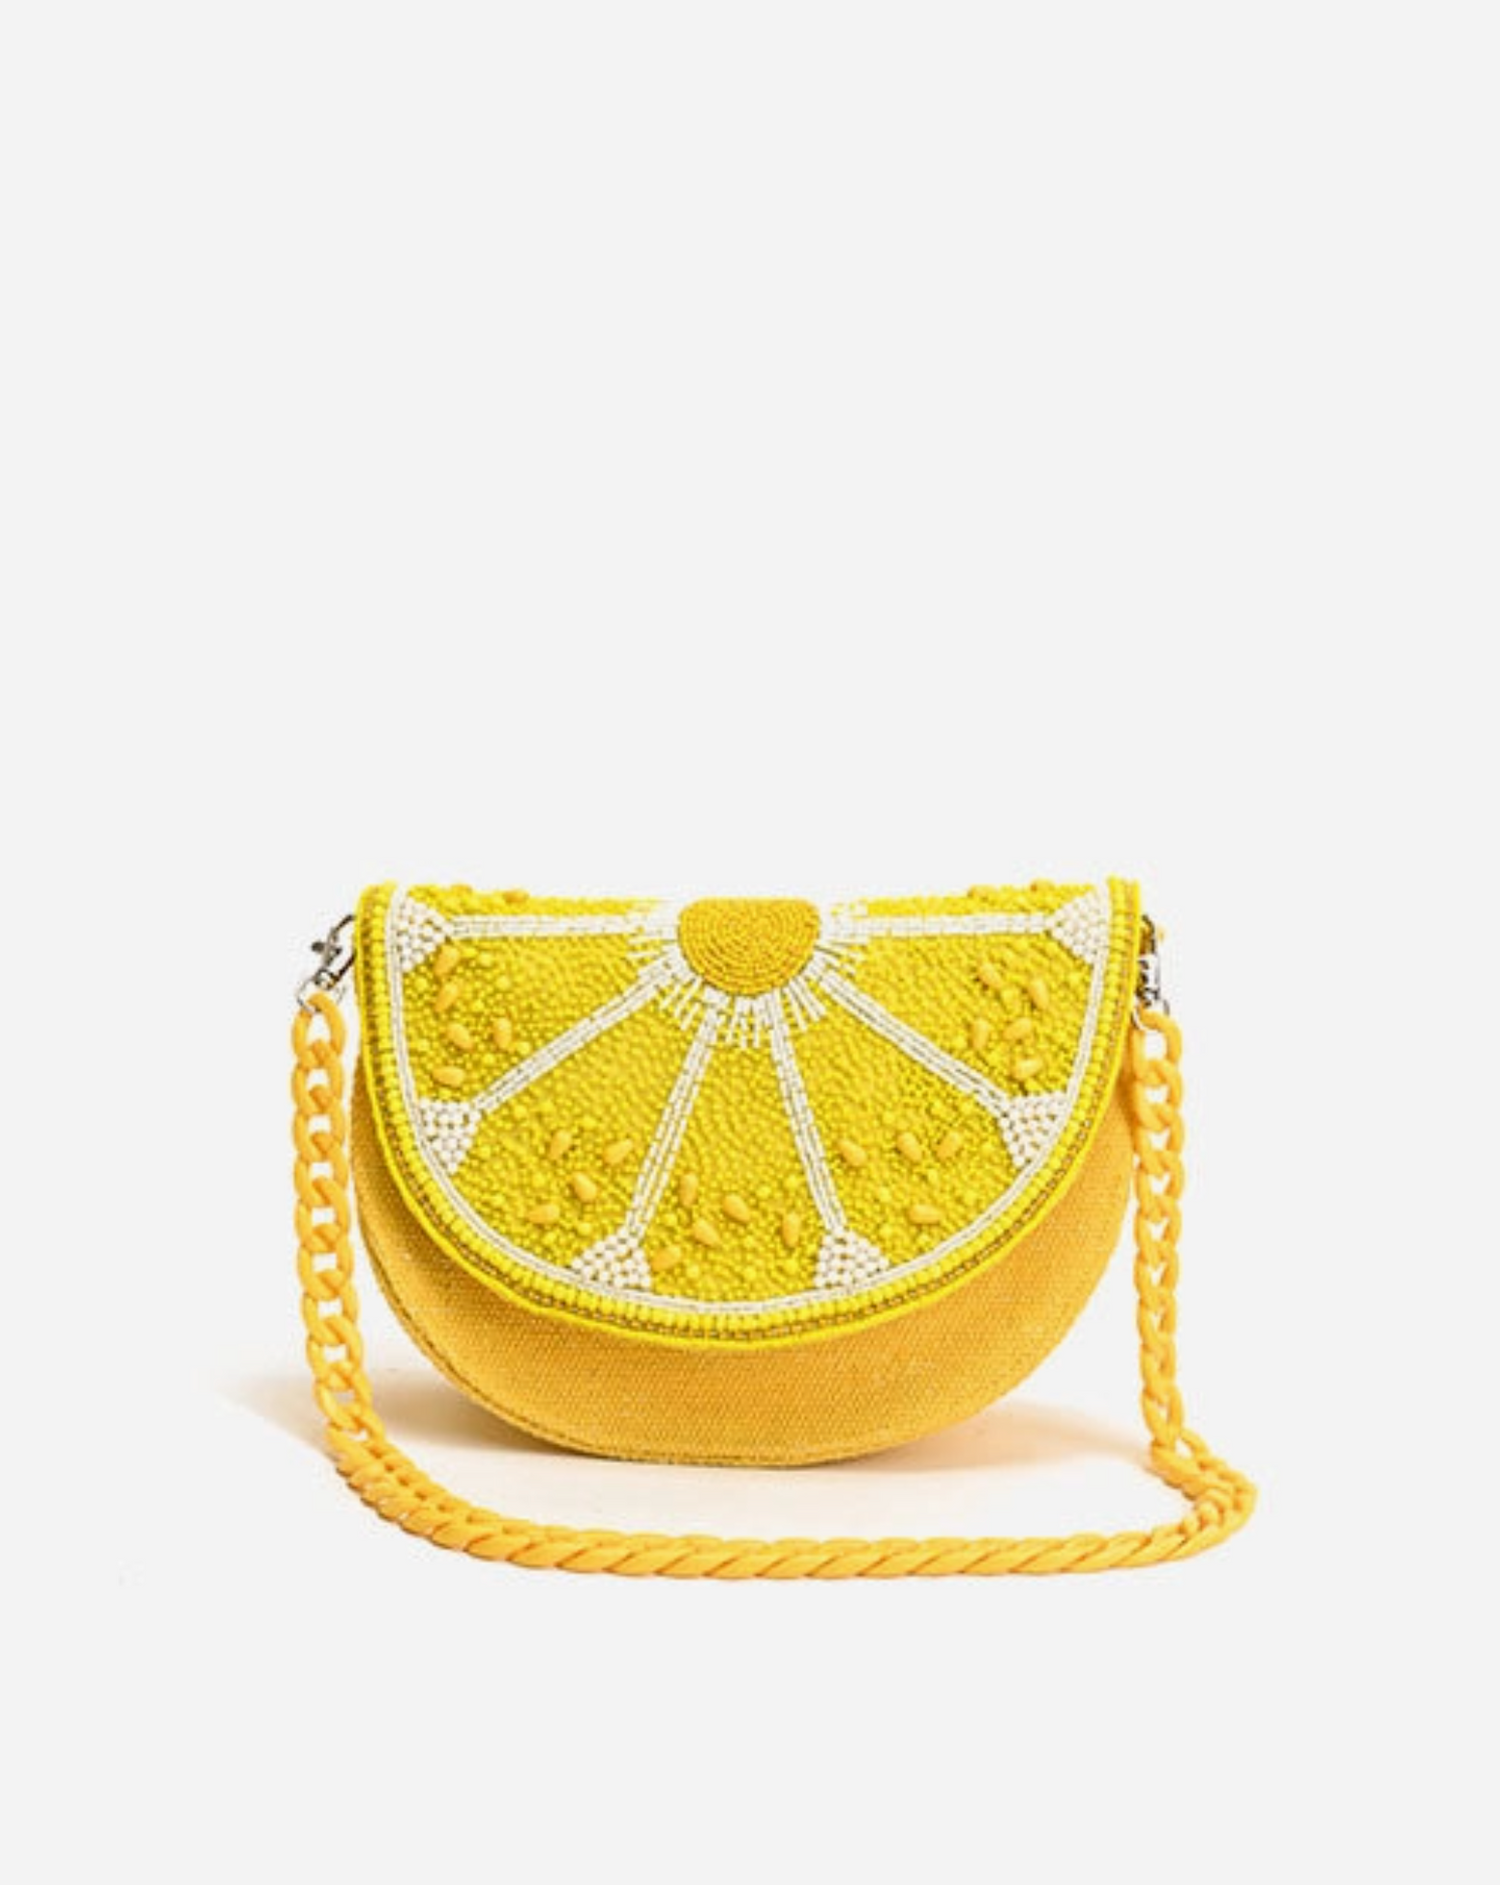 Couture Crescent Lemon Shoulder Bag